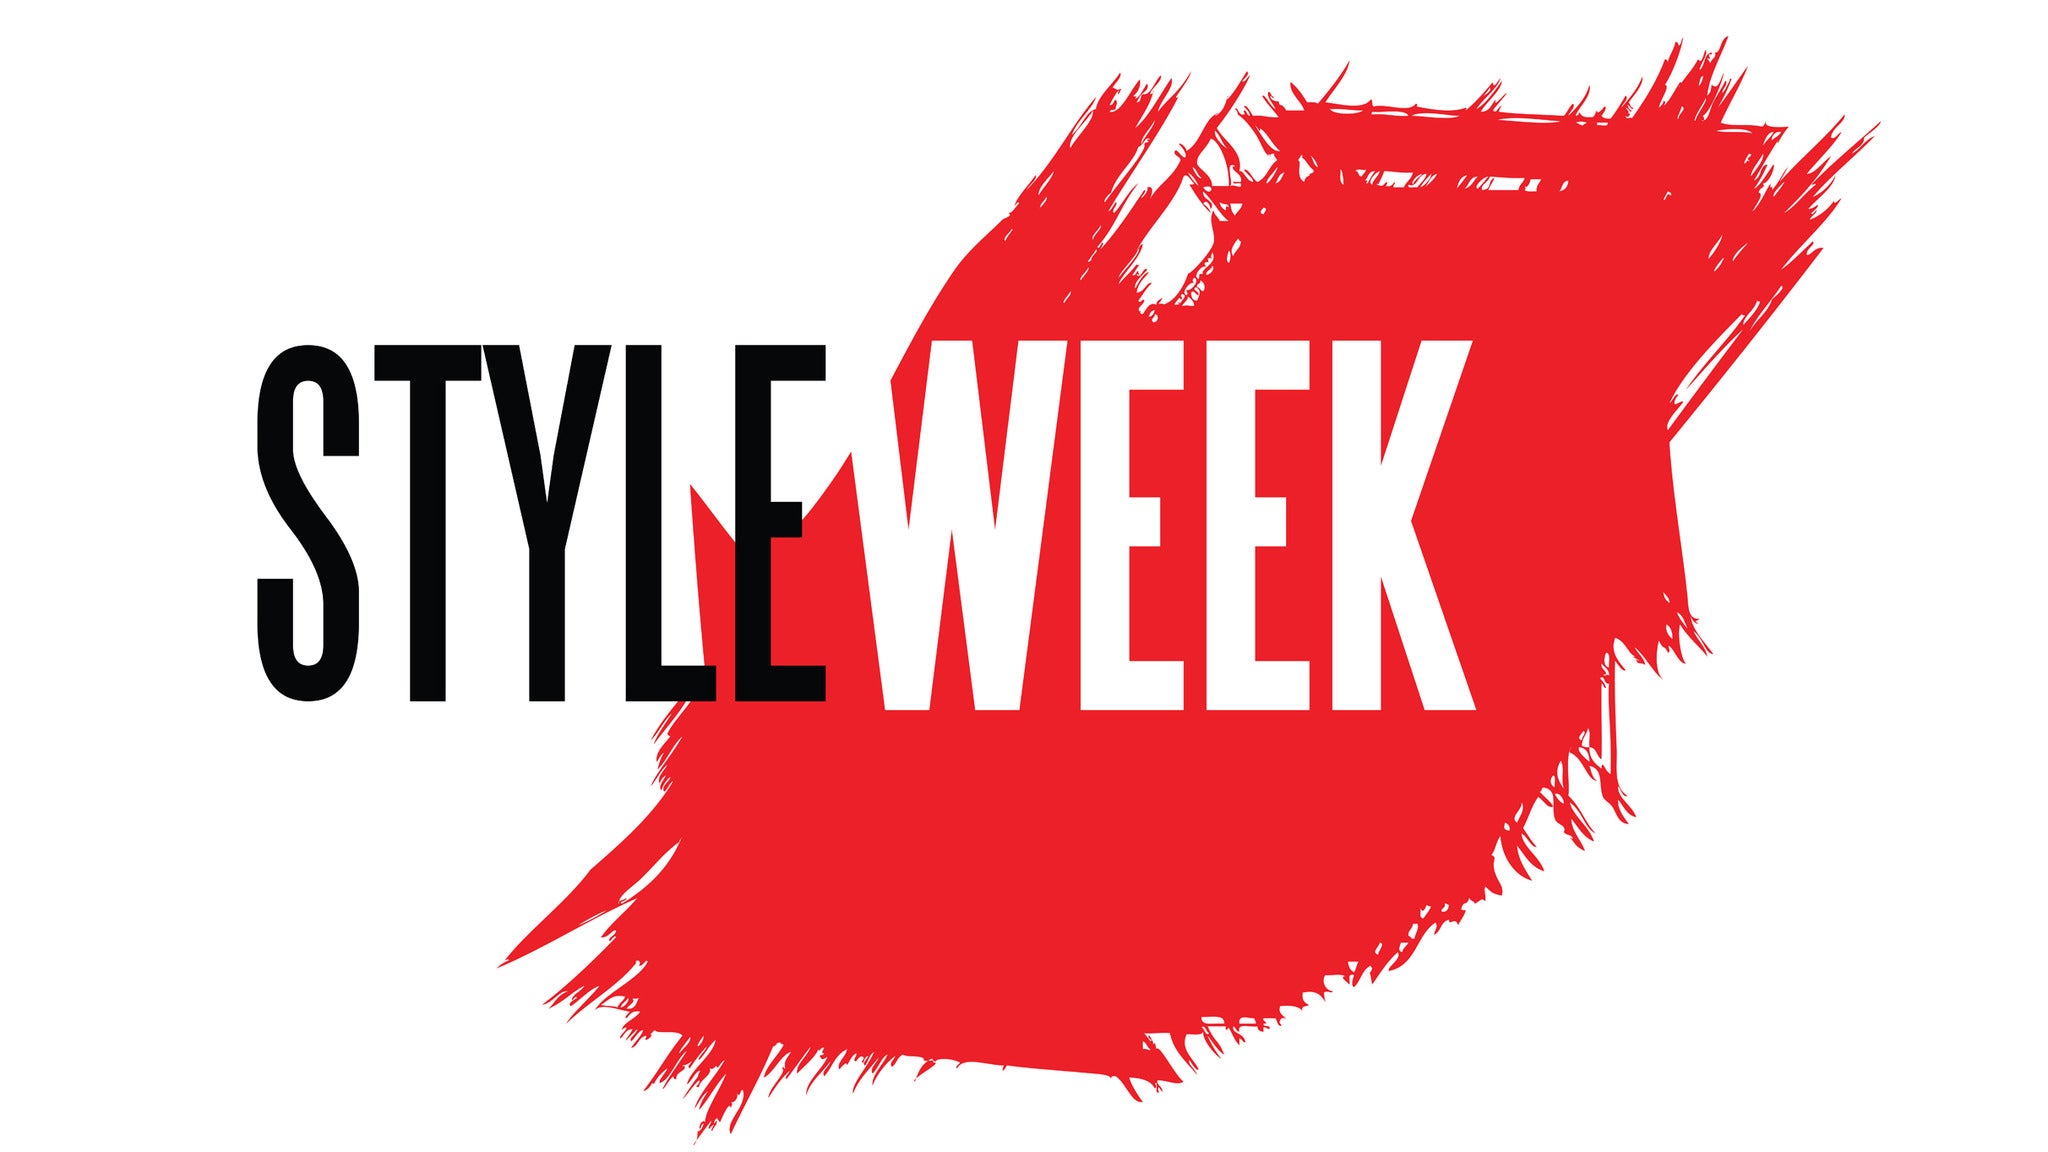 Styleweek Northeast presale information on freepresalepasswords.com